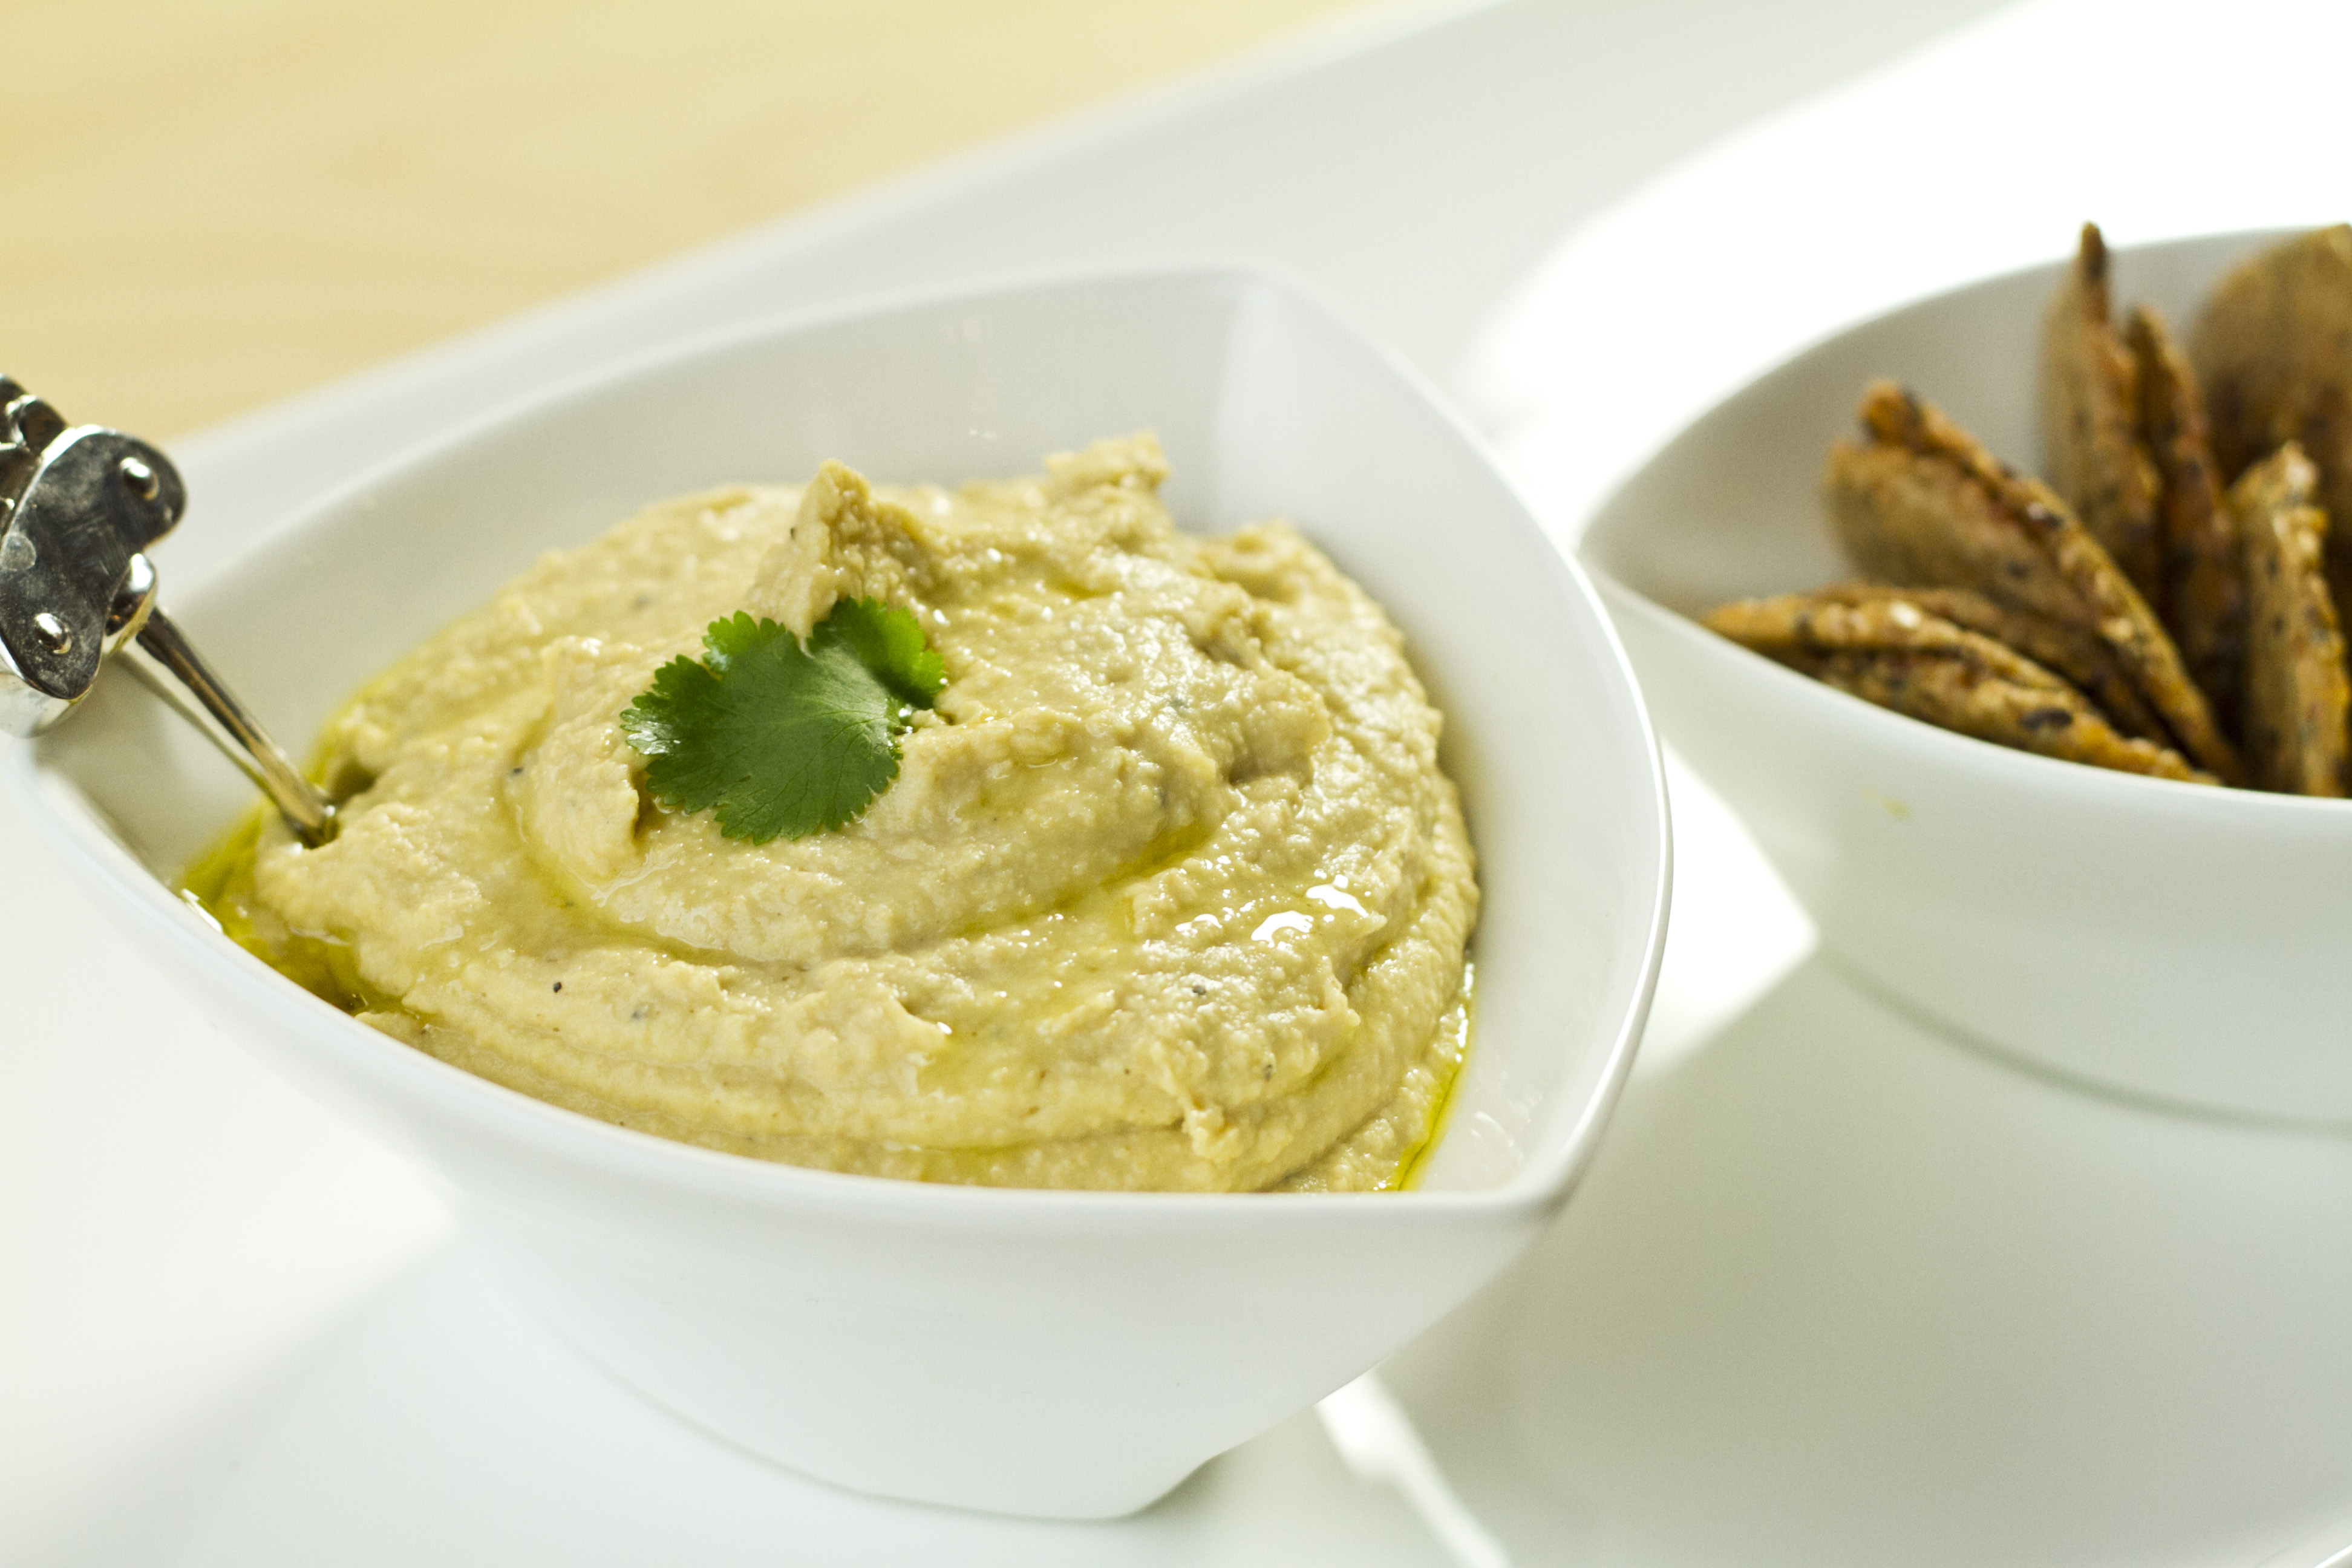 Video: Best Ever Hummus Recipe + my 2 secret ingredients revealed!